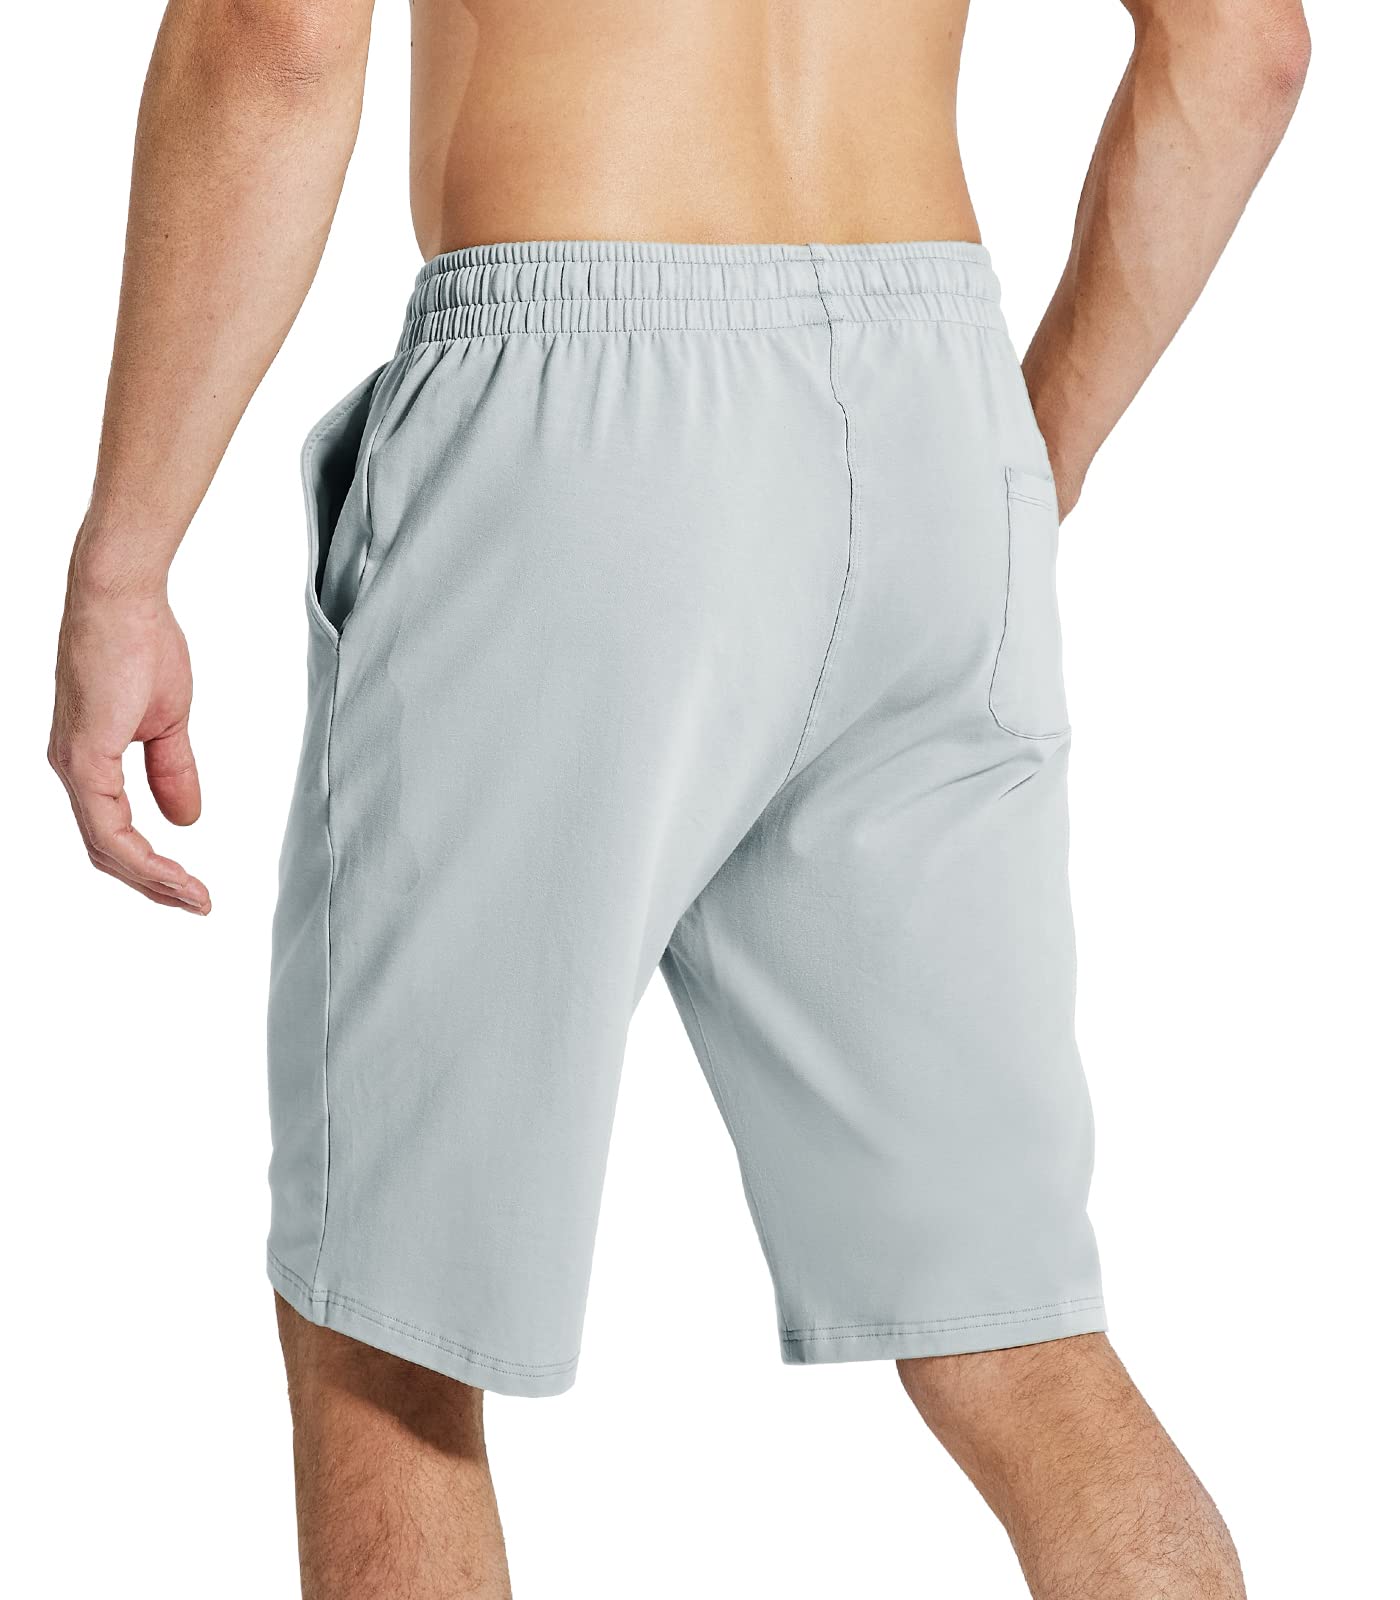 MIER Men's Workout Cotton Shorts 11'' Athletic Knit Shorts